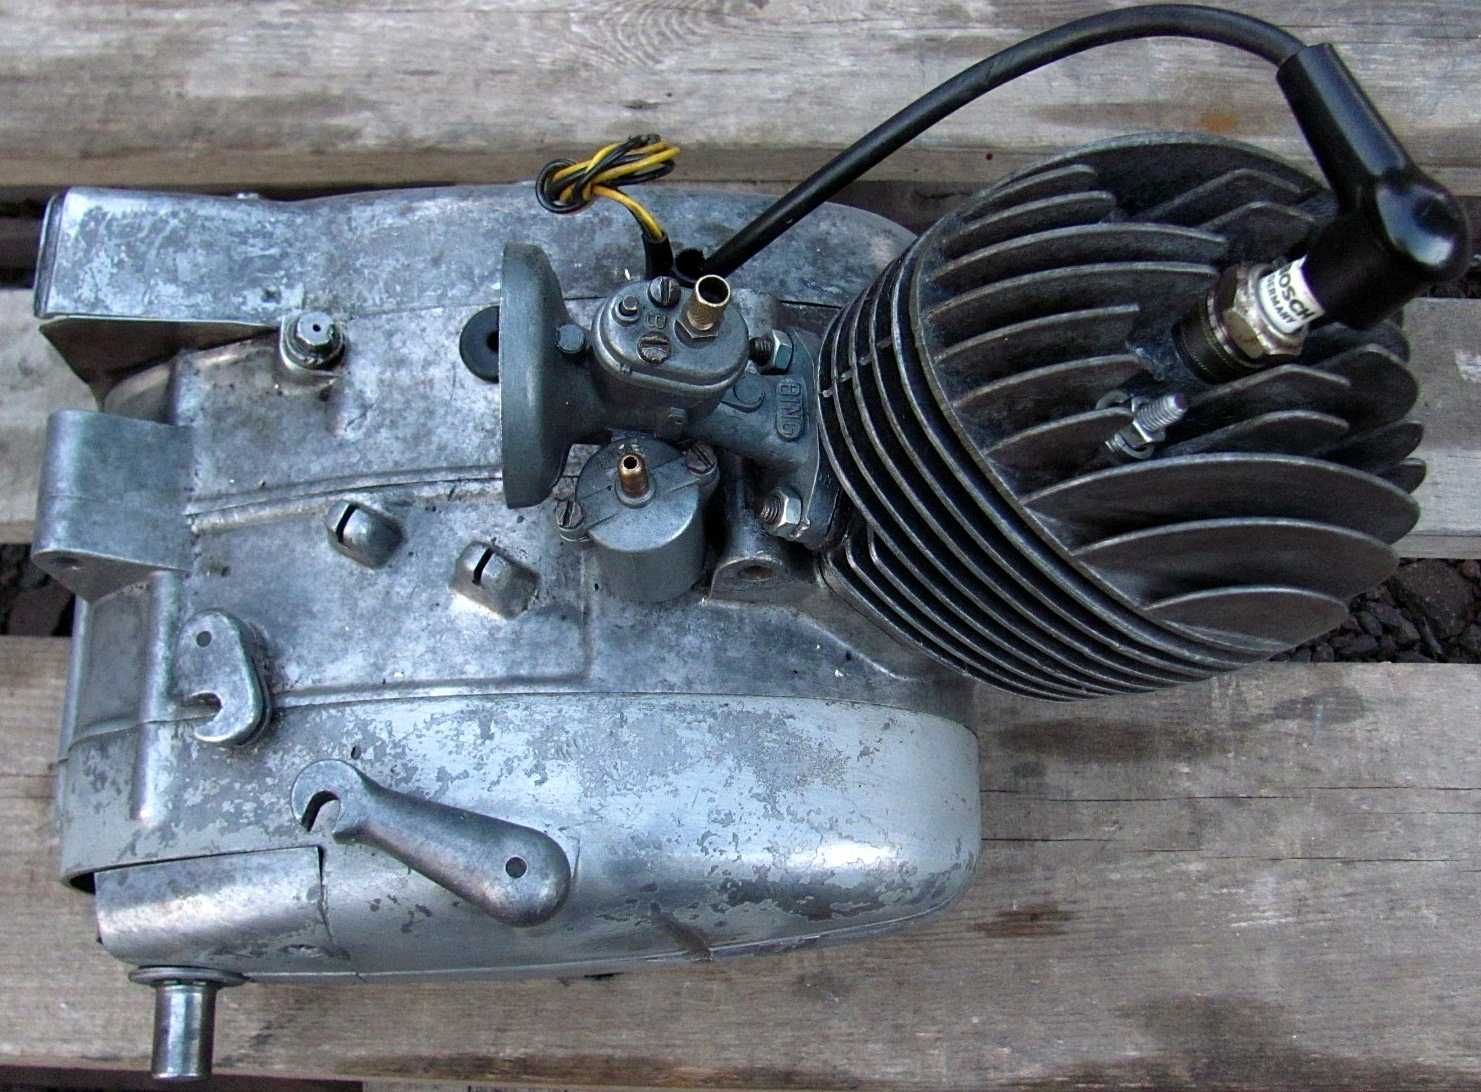 Silnik 50 ZUNDAPP super combinette 1959 - Moped - Na pedała !!!